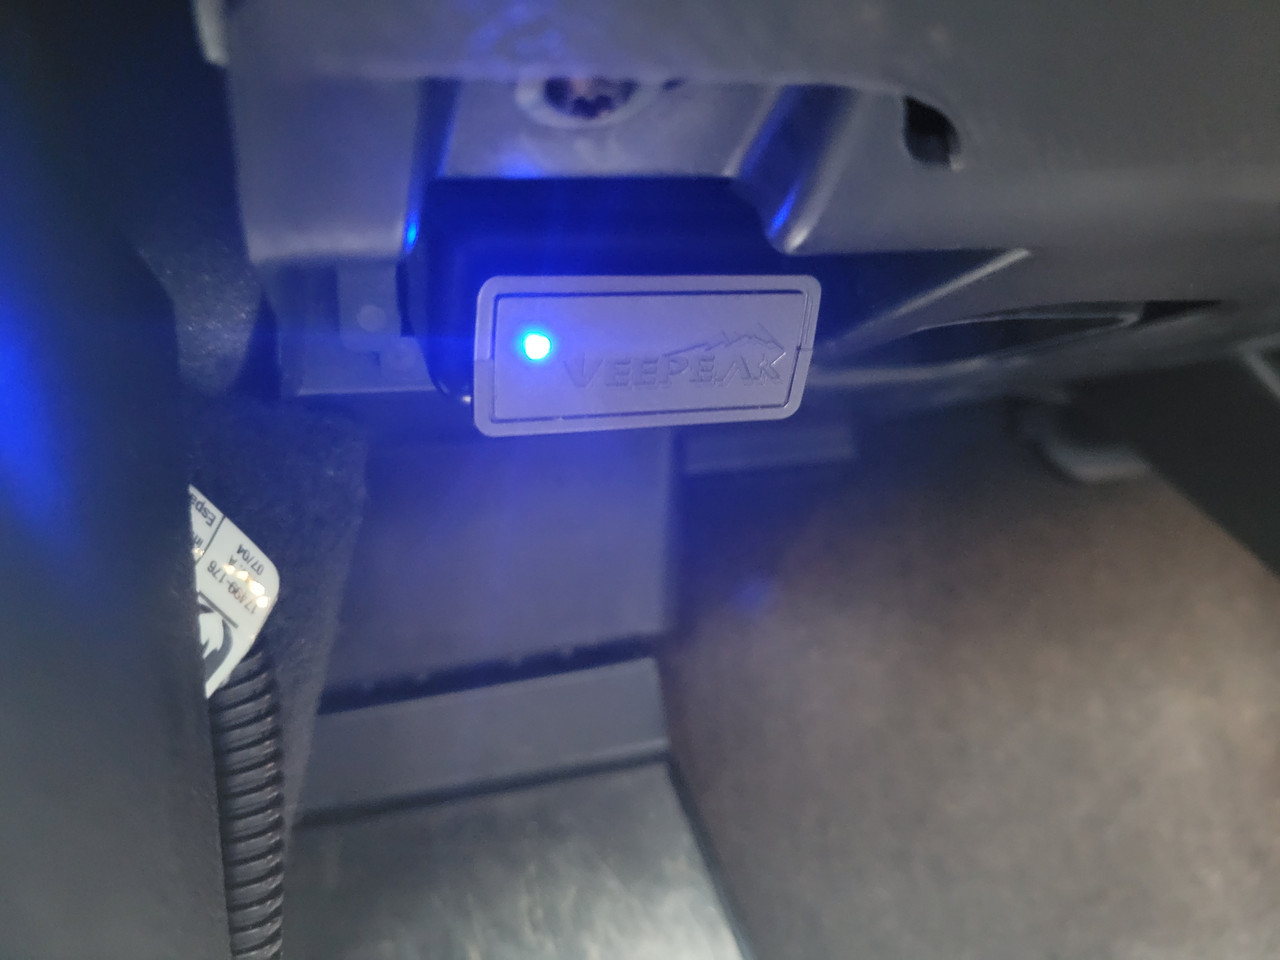 VeePeak Bluetooth OBDII Diagnostic Tool plugged into a 2014 BMW X5